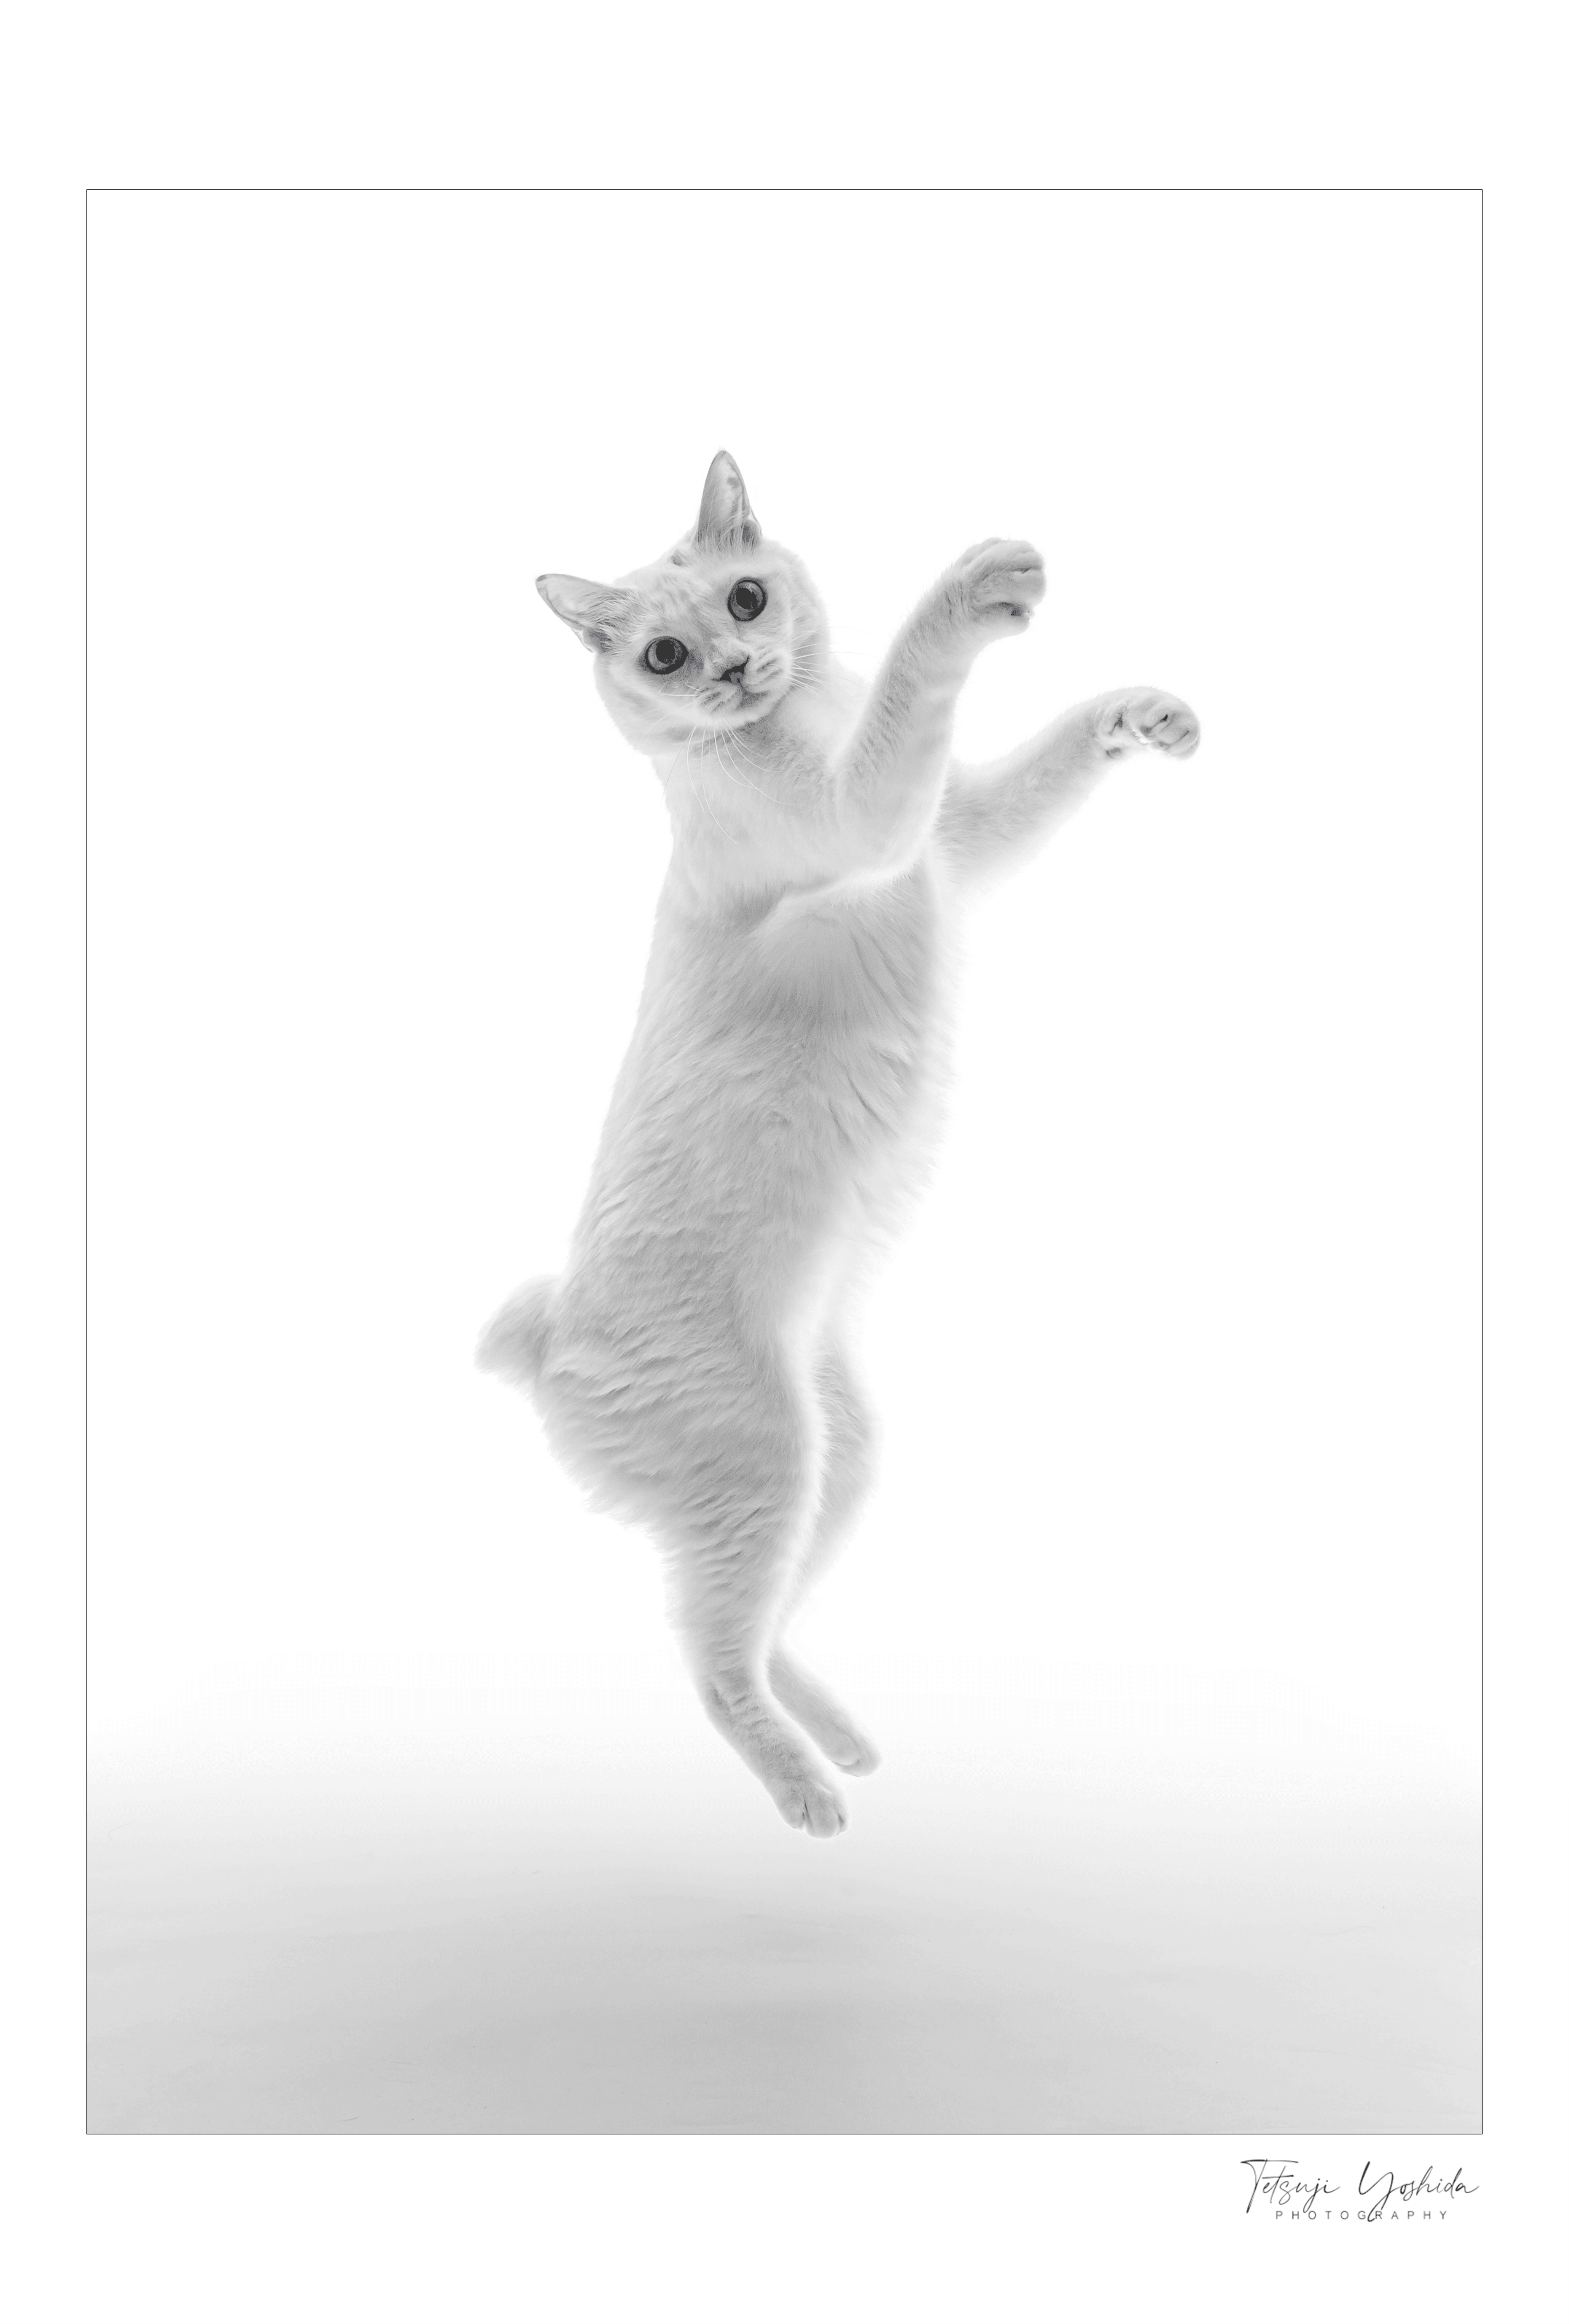 Teto the white cat "Jumping #2"